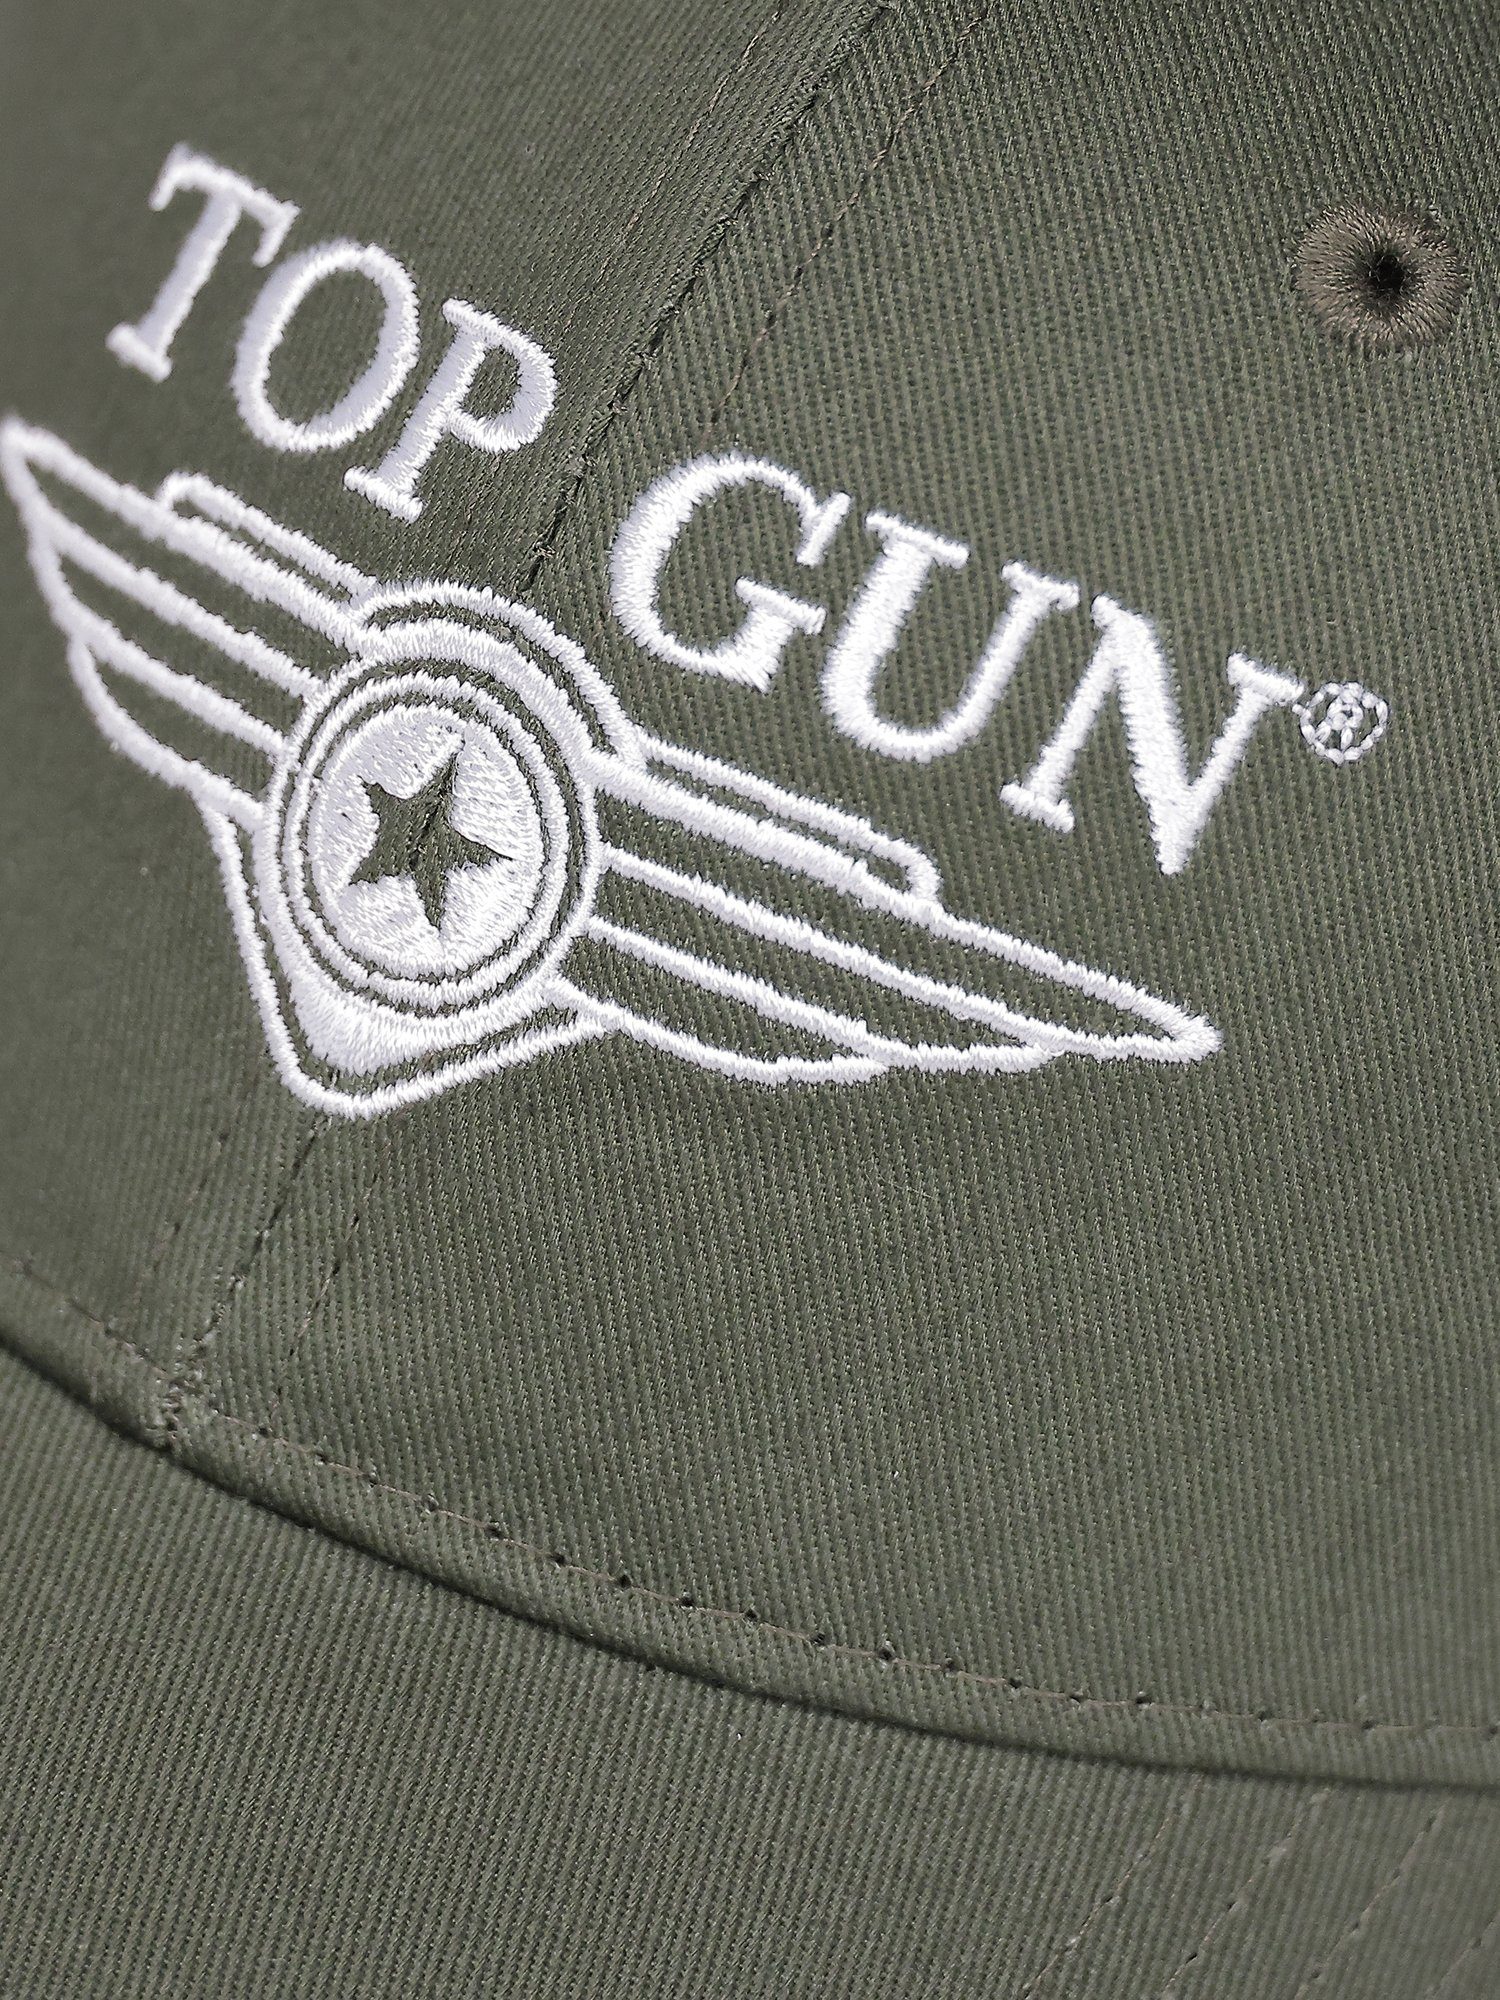 TOP GUN Snapback Cap grau TG22013